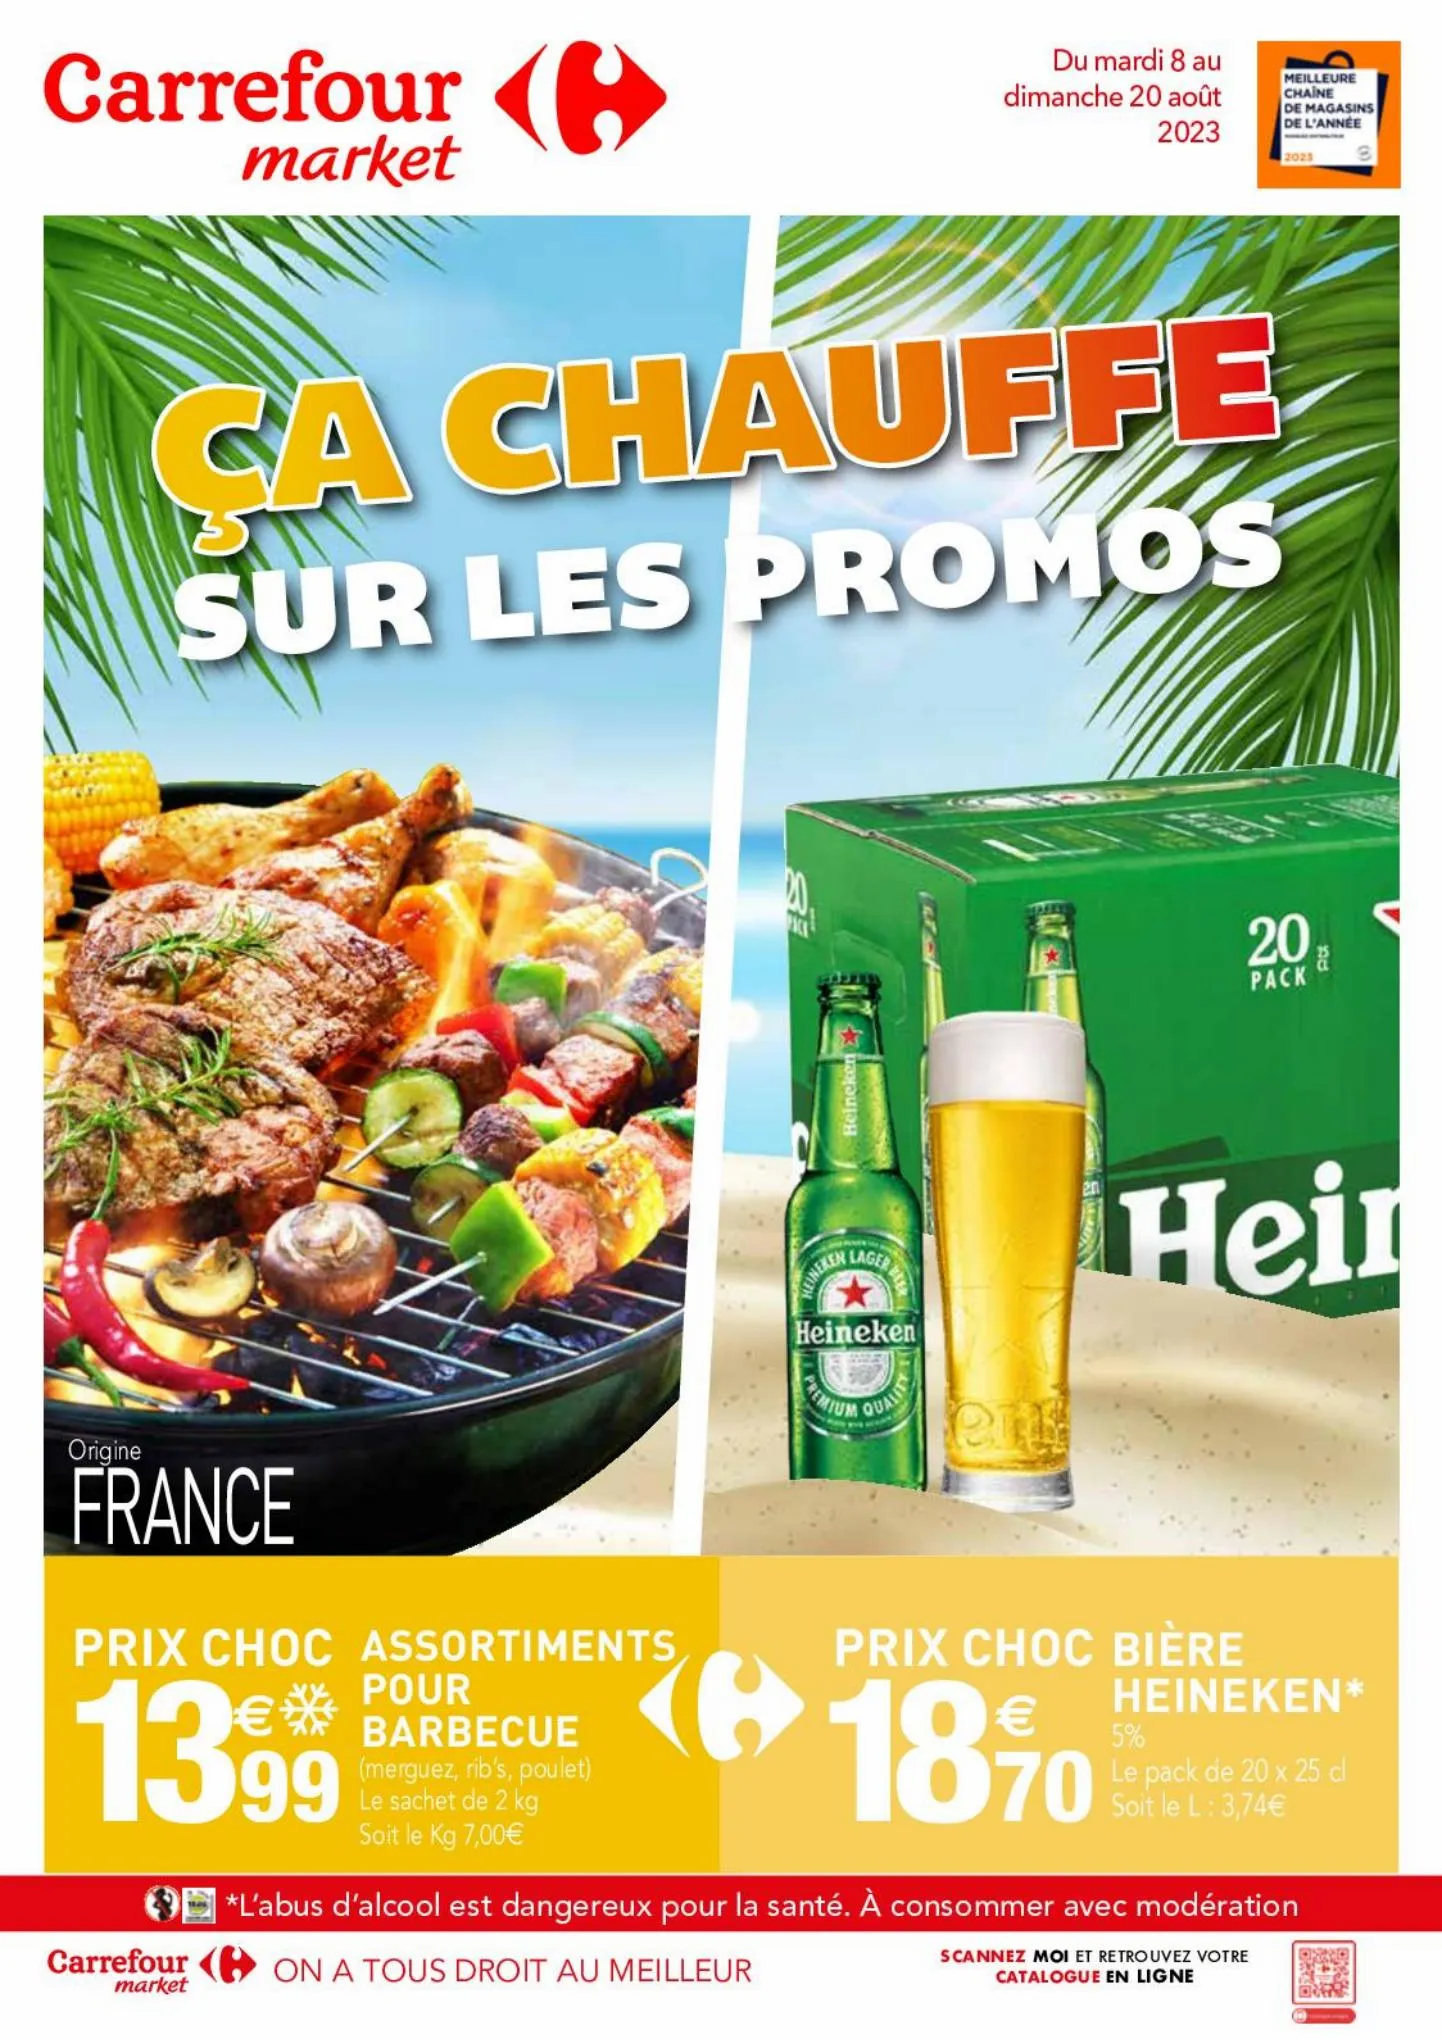 Catalogue Ca chauffe sur le promos-Guadeloupe, page 00001